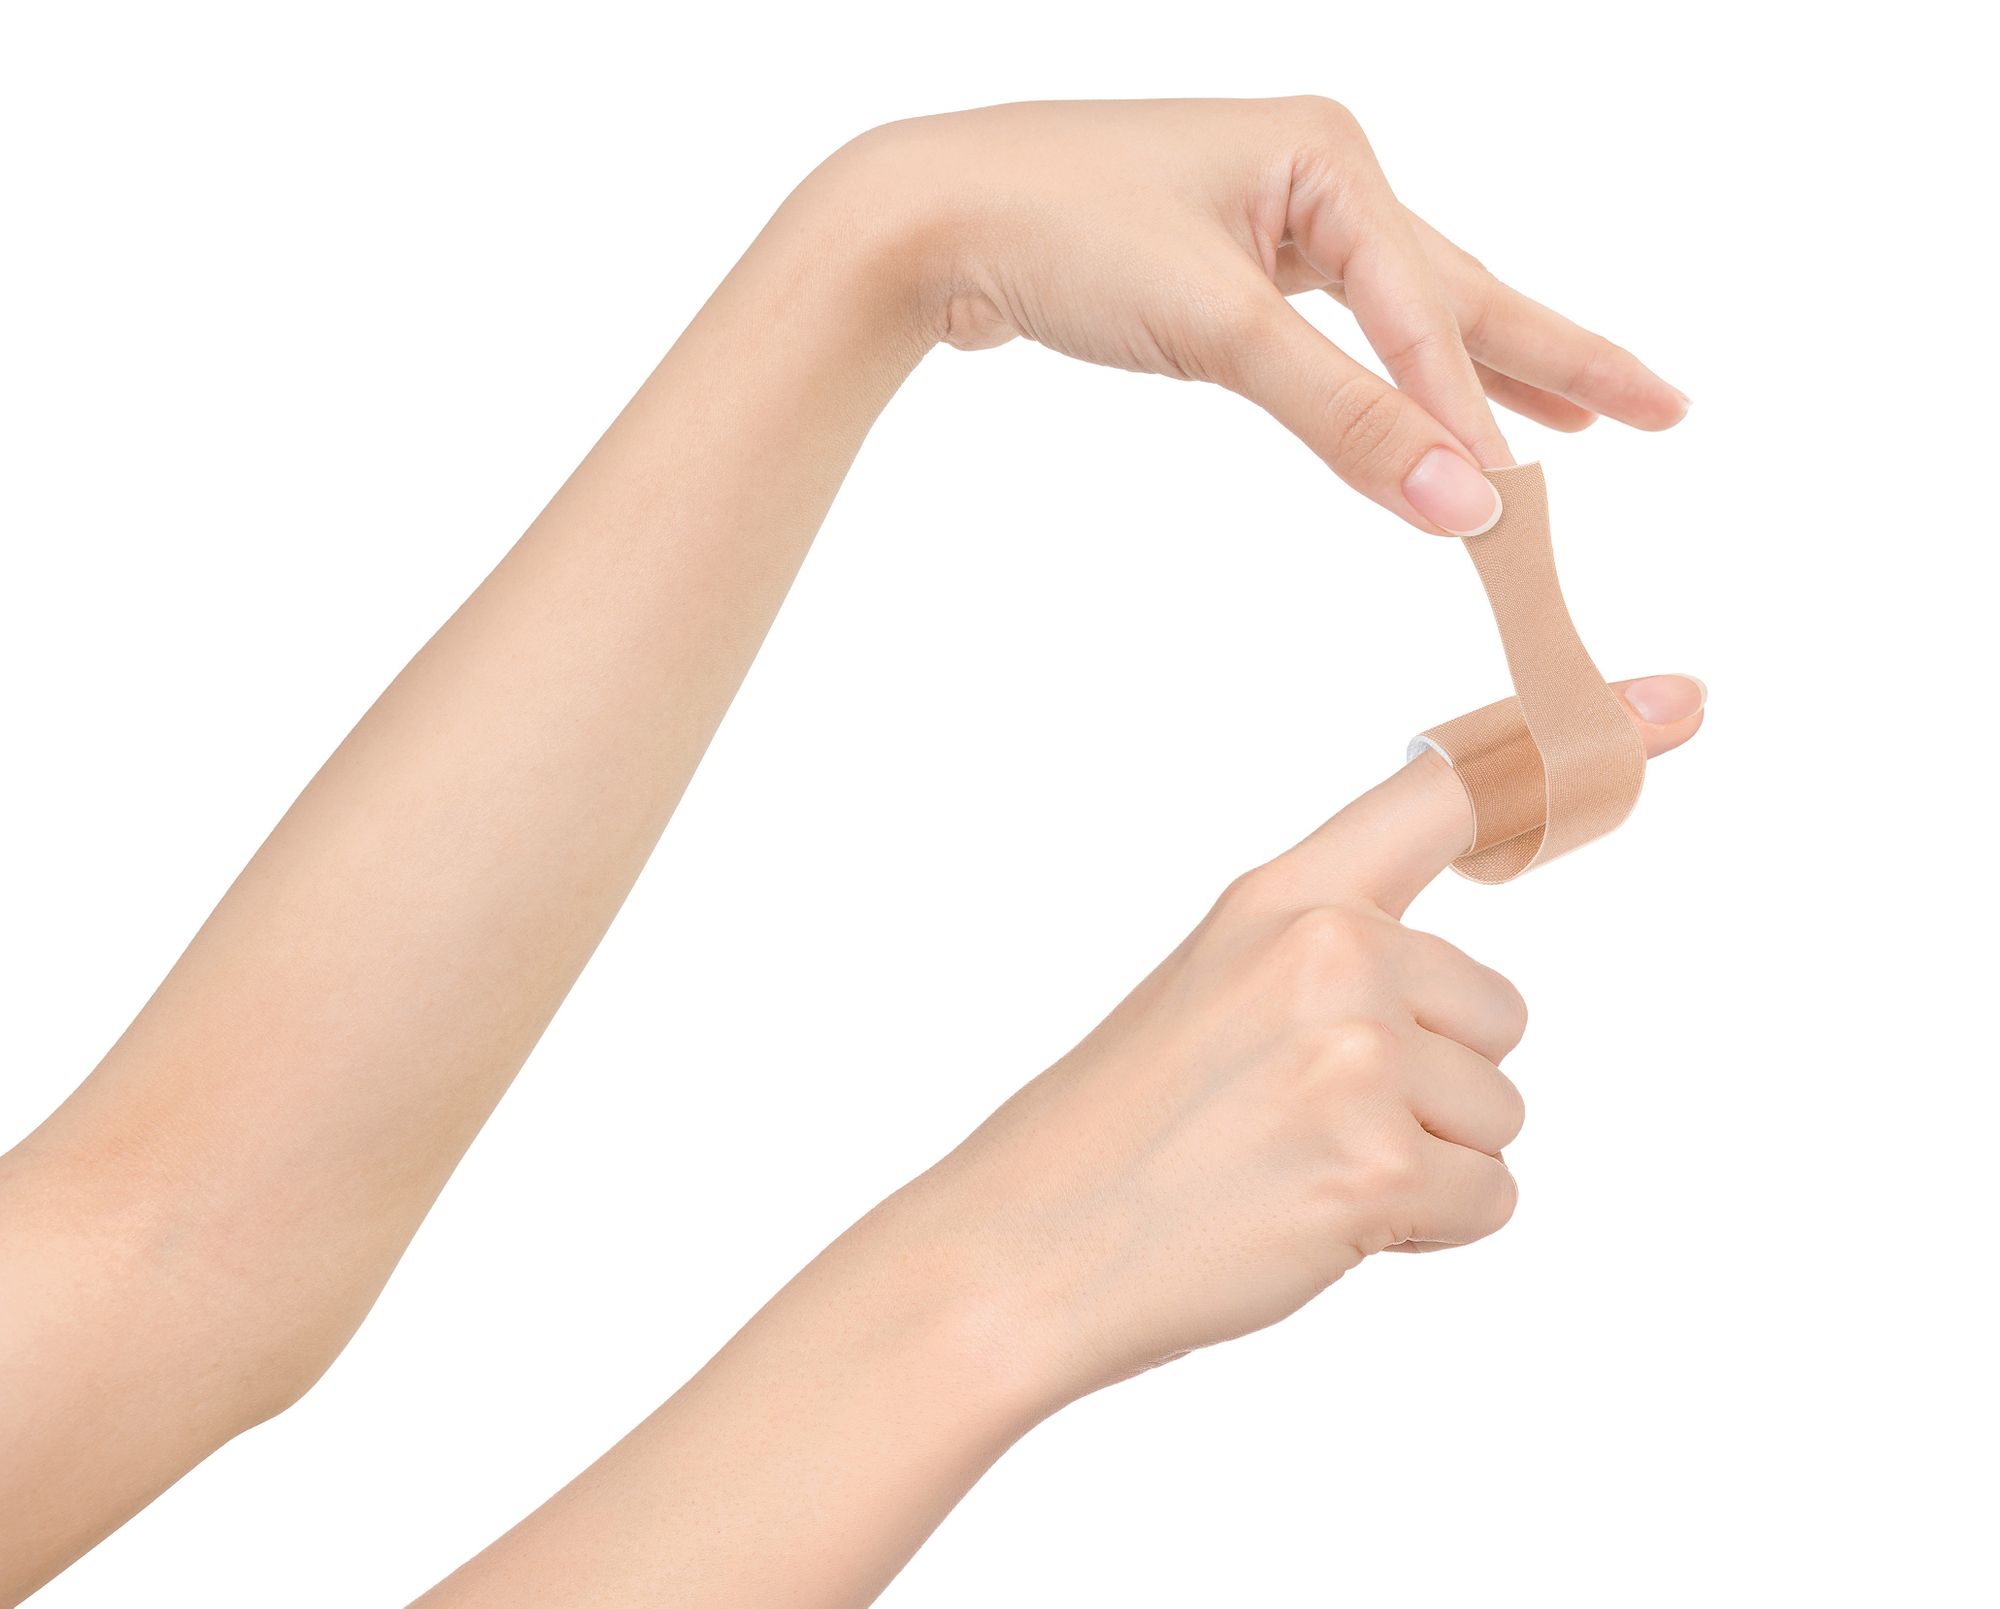 10 Lifemed Finger-Strips 12 cm x 2 cm hautfarben Flexible